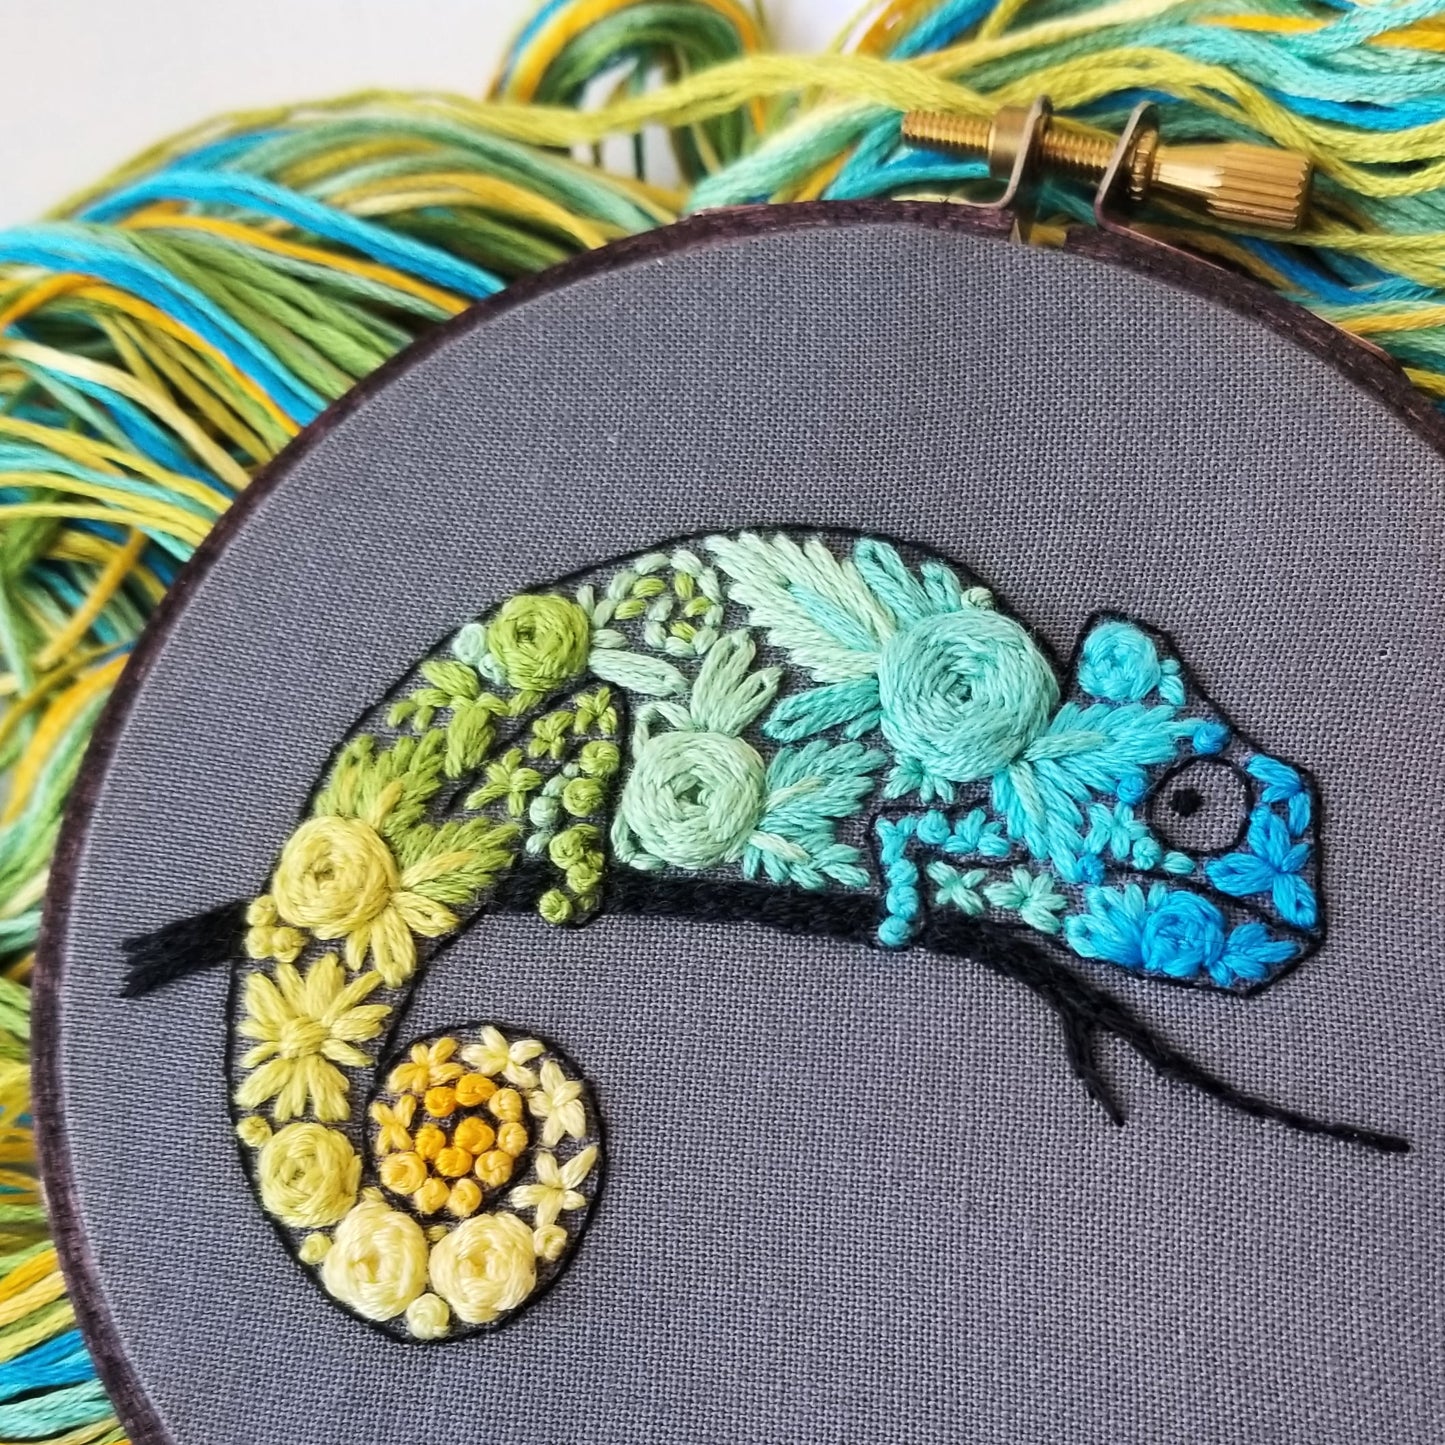 Chameleon Embroidery Pattern (PDF)